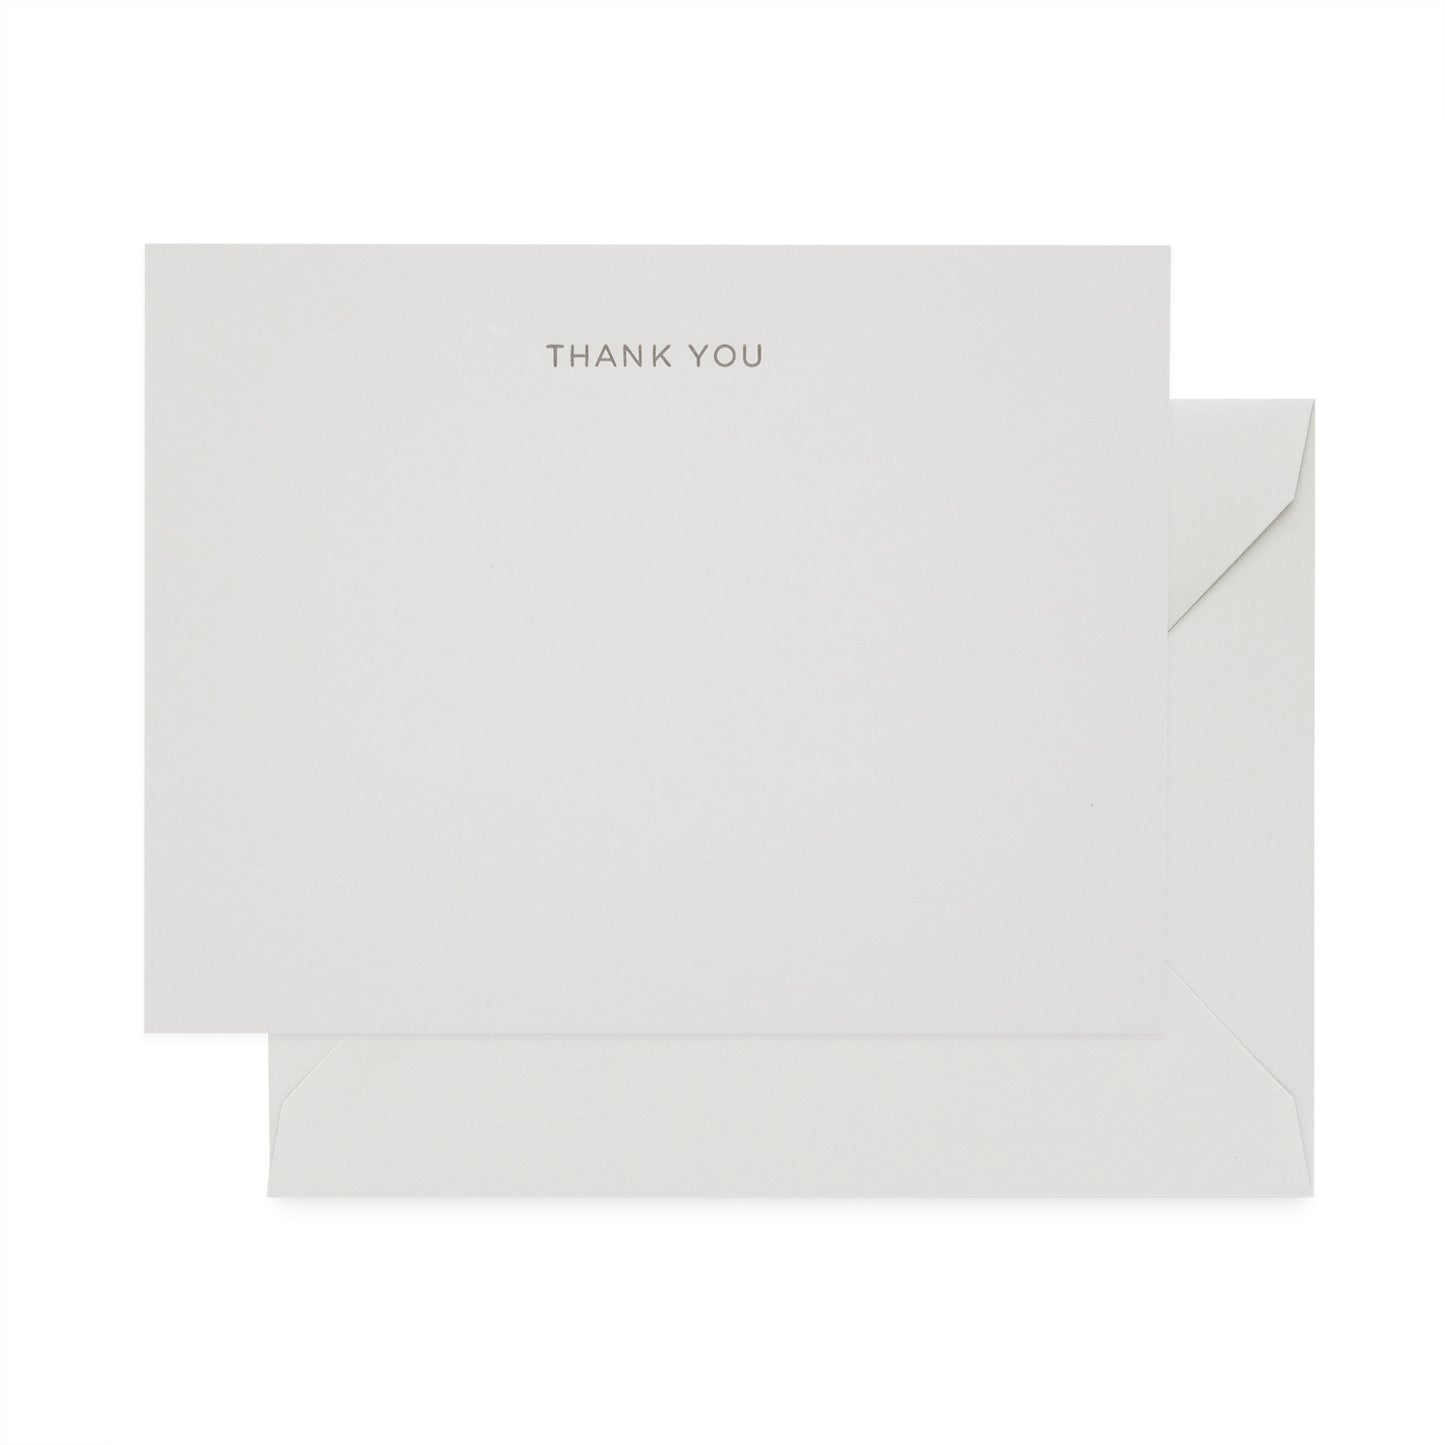 antique grey card with grey thank you text, antique grey envelope